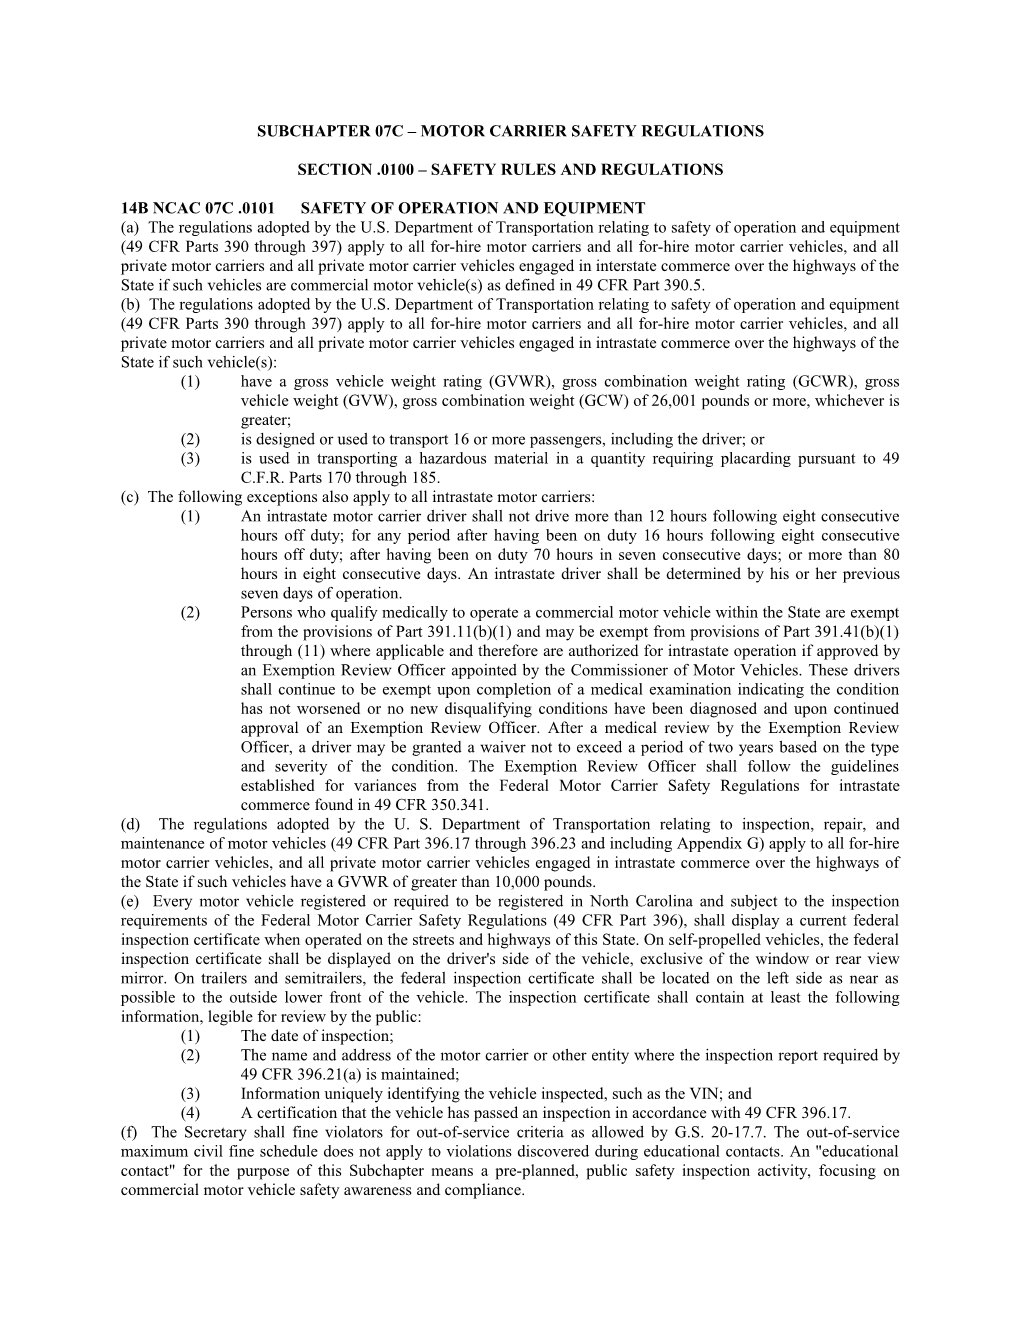 Subchapter 07C Motor Carrier Safety Regulations